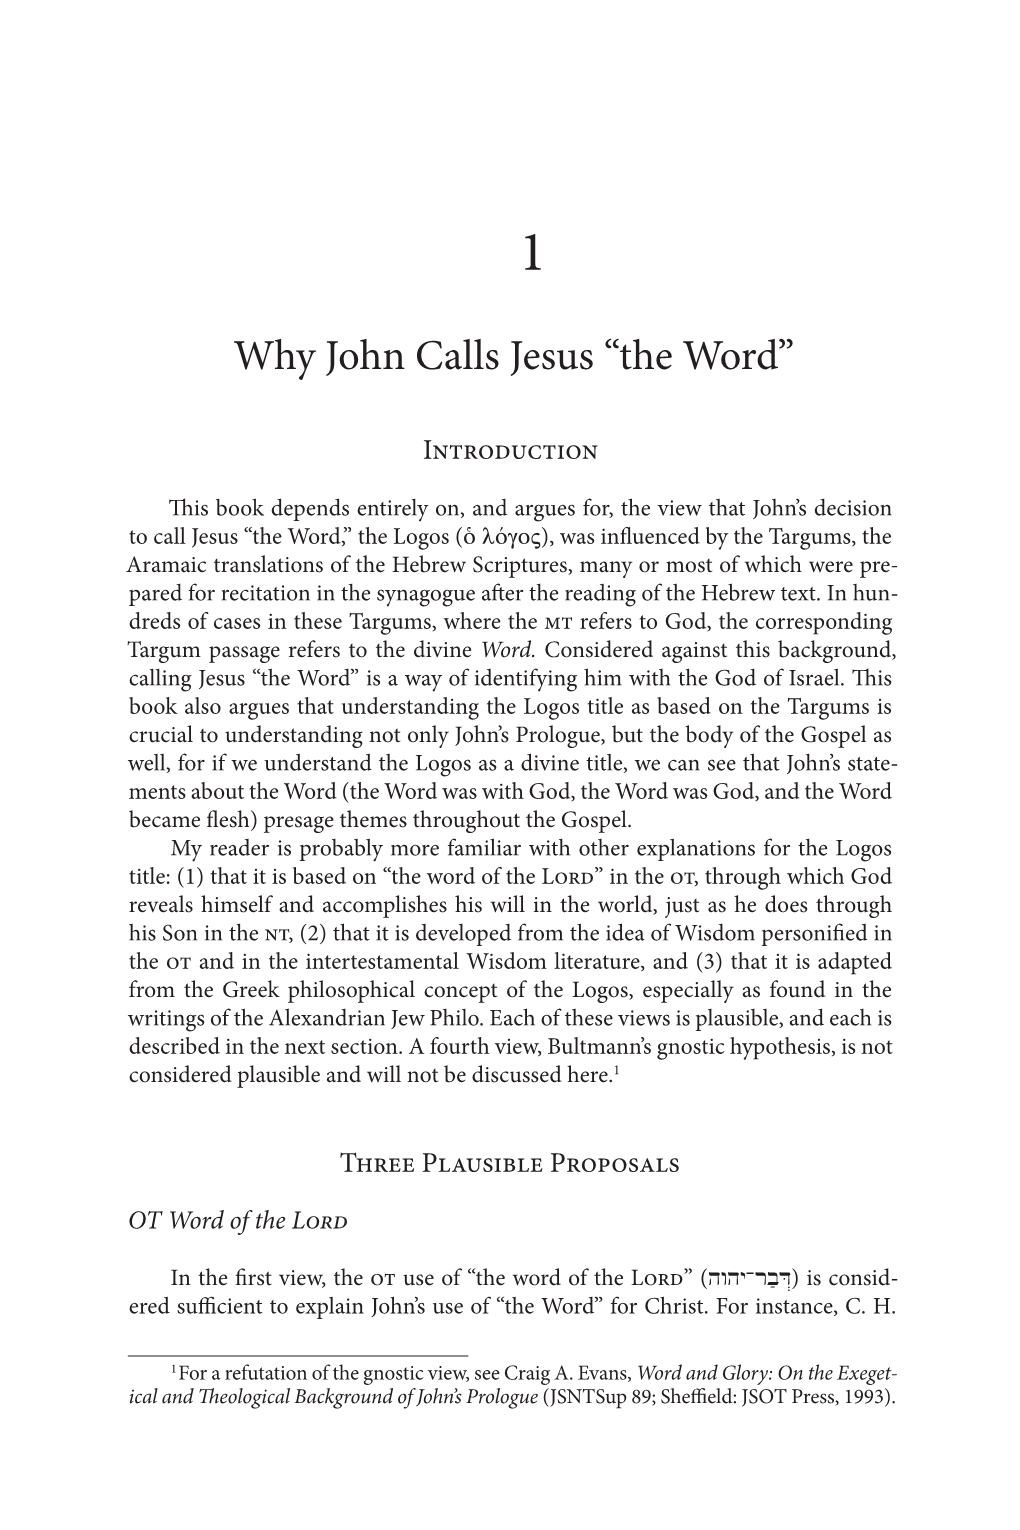 Why John Calls Jesus “The Word”